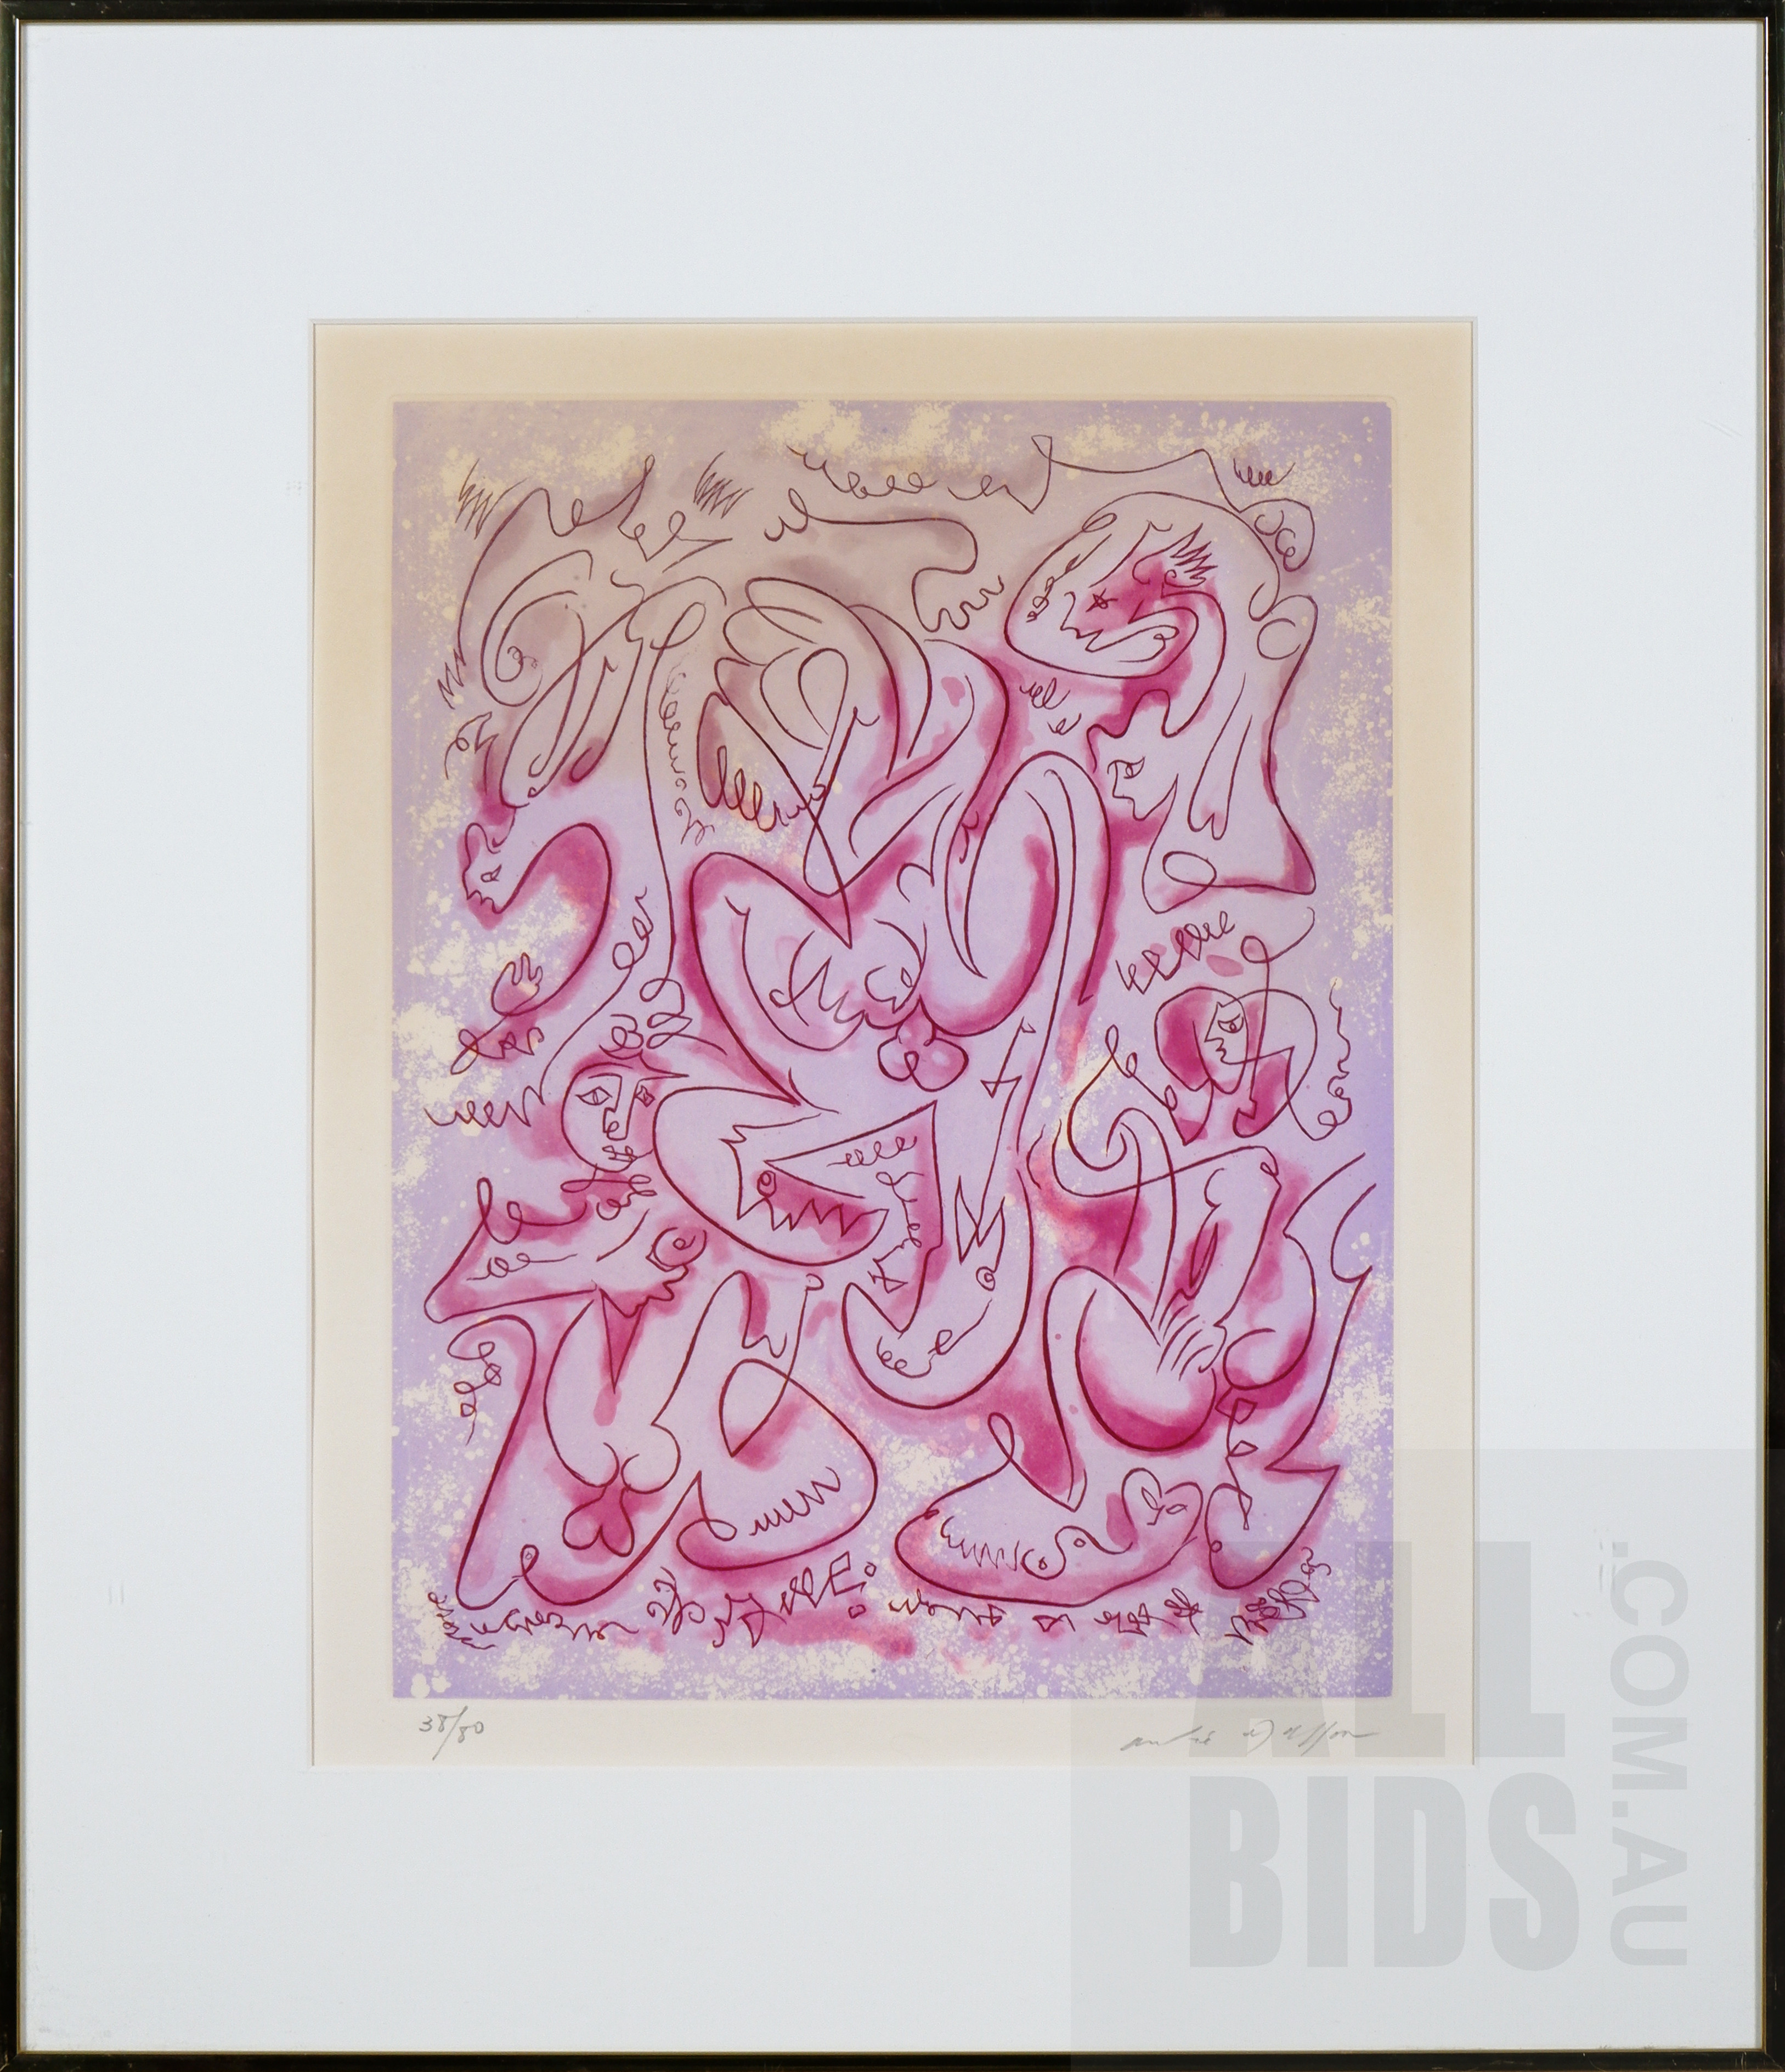 'Andre Masson (1867-1987, Belgian), LEmerveille Merveilleux 1973, Etching and Aquatint, 34 x 26 cm (image size)'